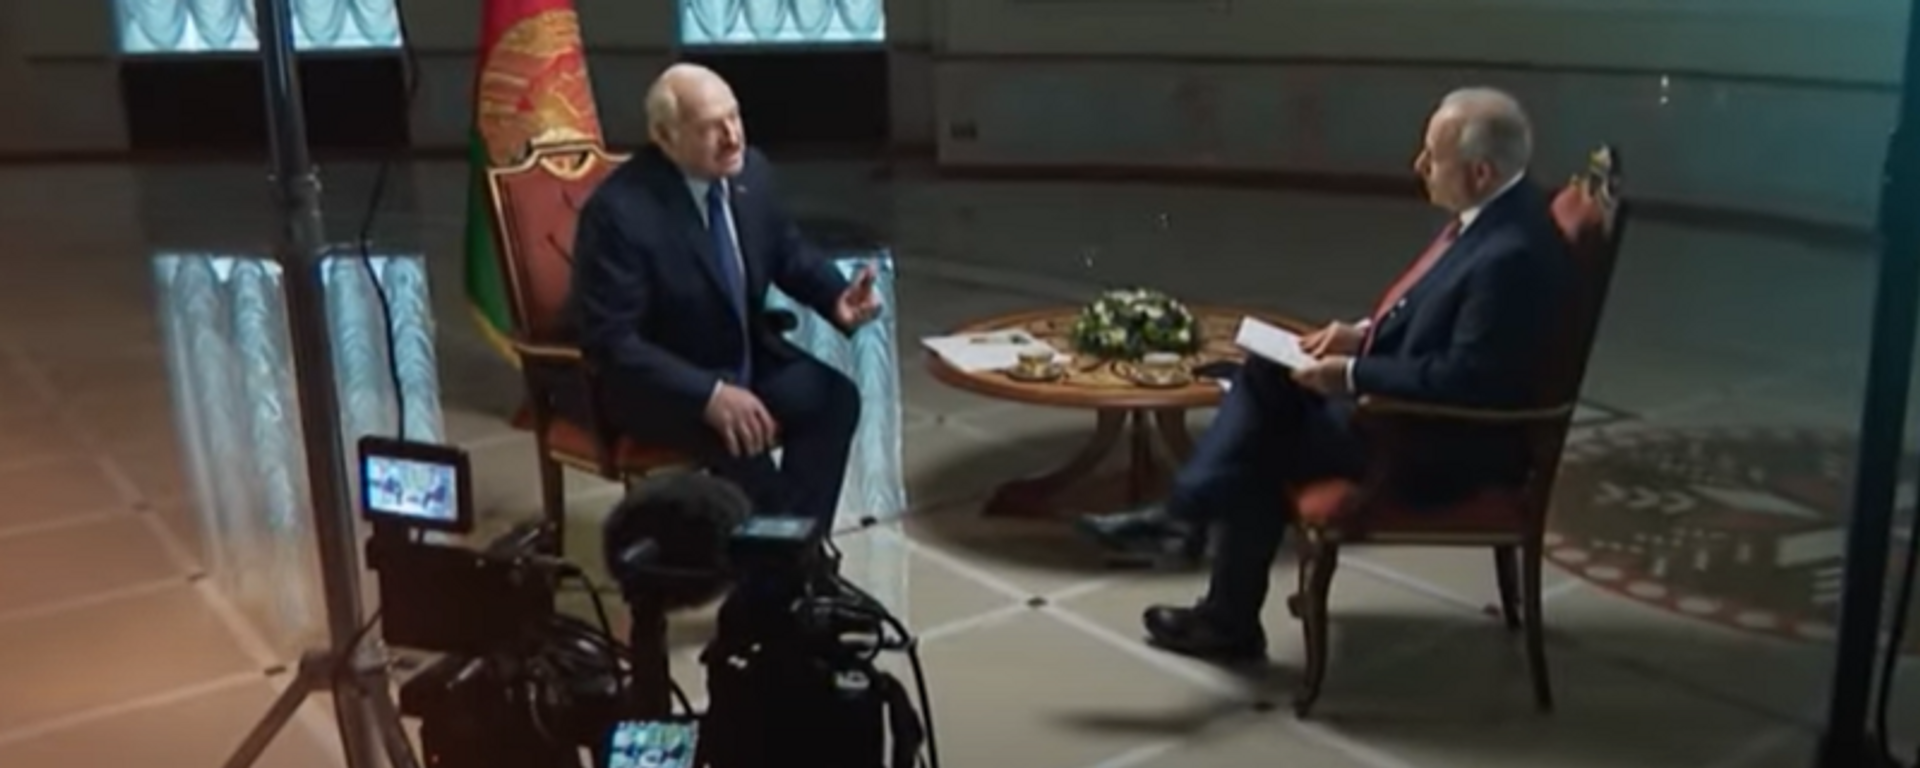 Интервью президента Лукашенко телеканалу BBC - полная версия - Sputnik Беларусь, 1920, 22.11.2021